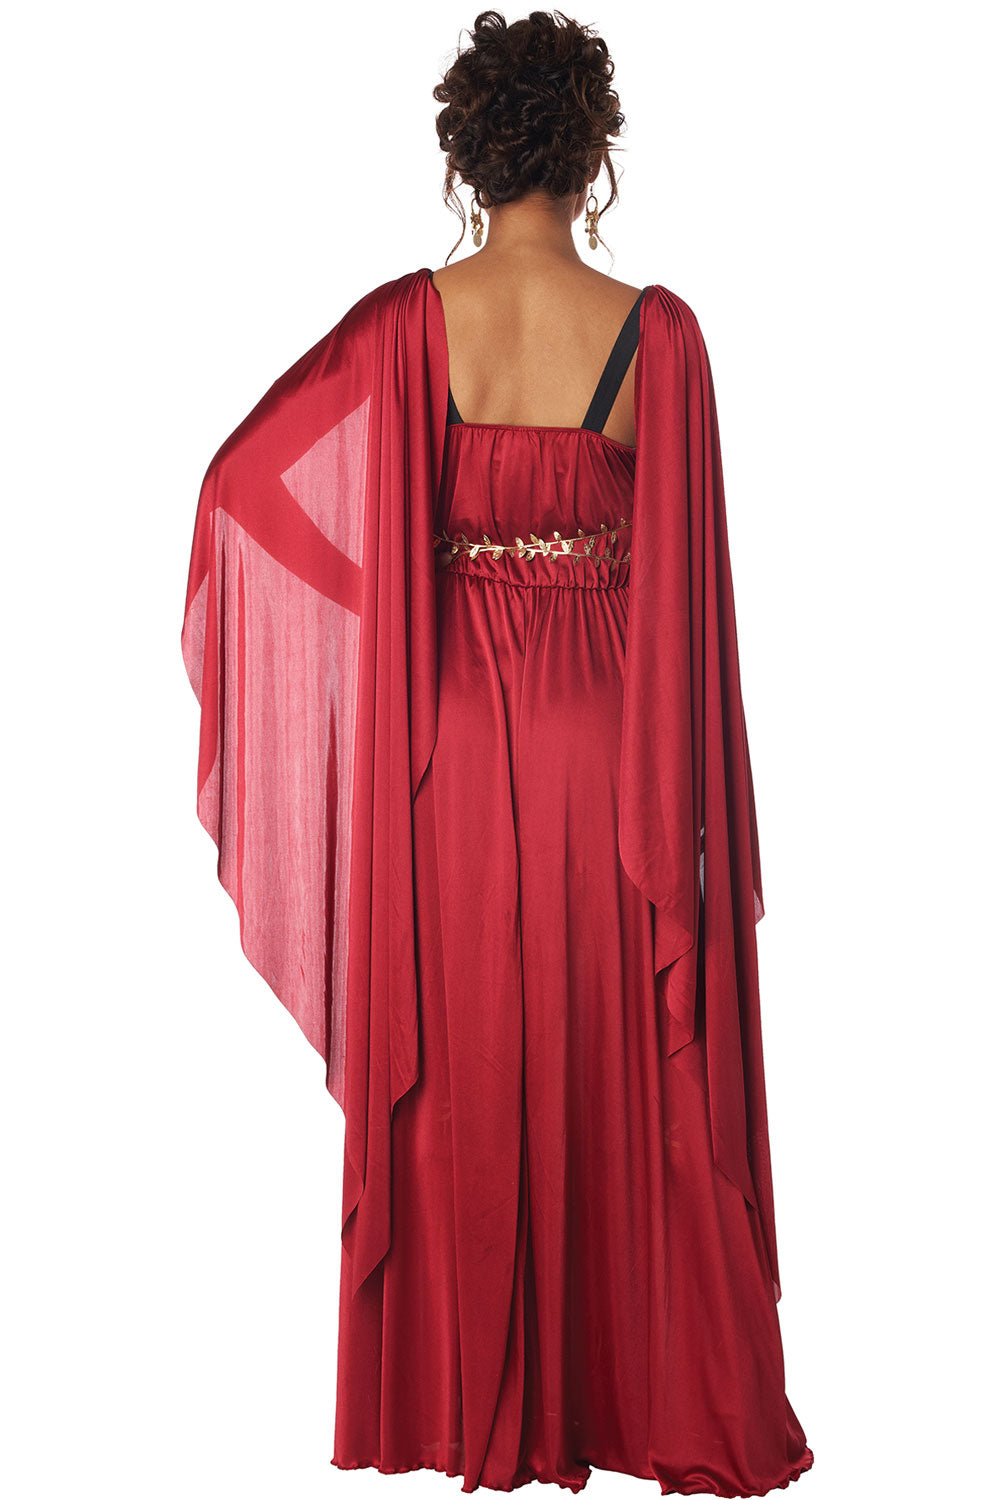 Roman Goddess / Adult California Costume 5021-124